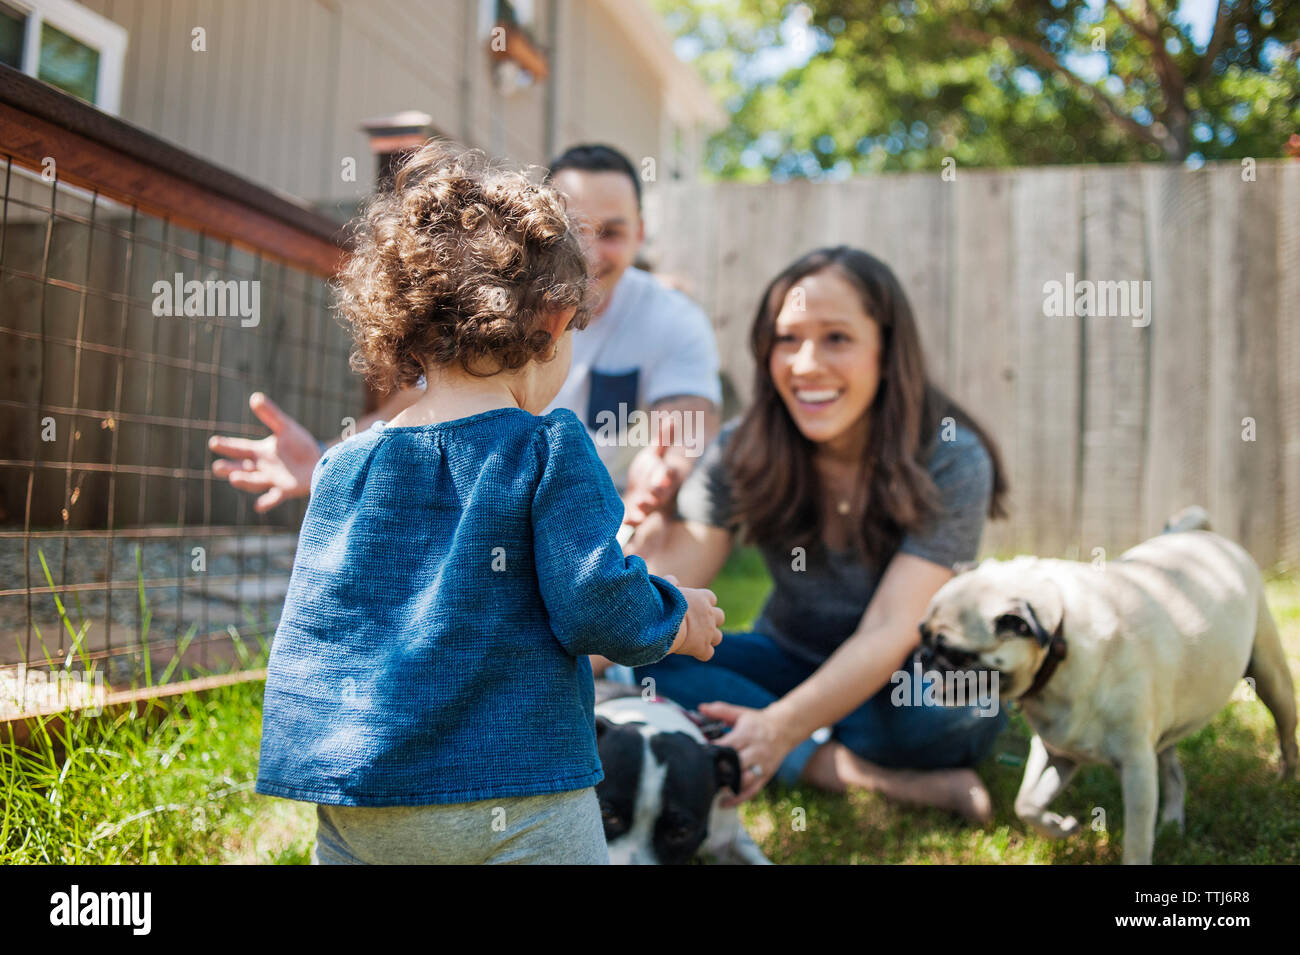 Happy family with dogs enjoying in backyard Stock Photo